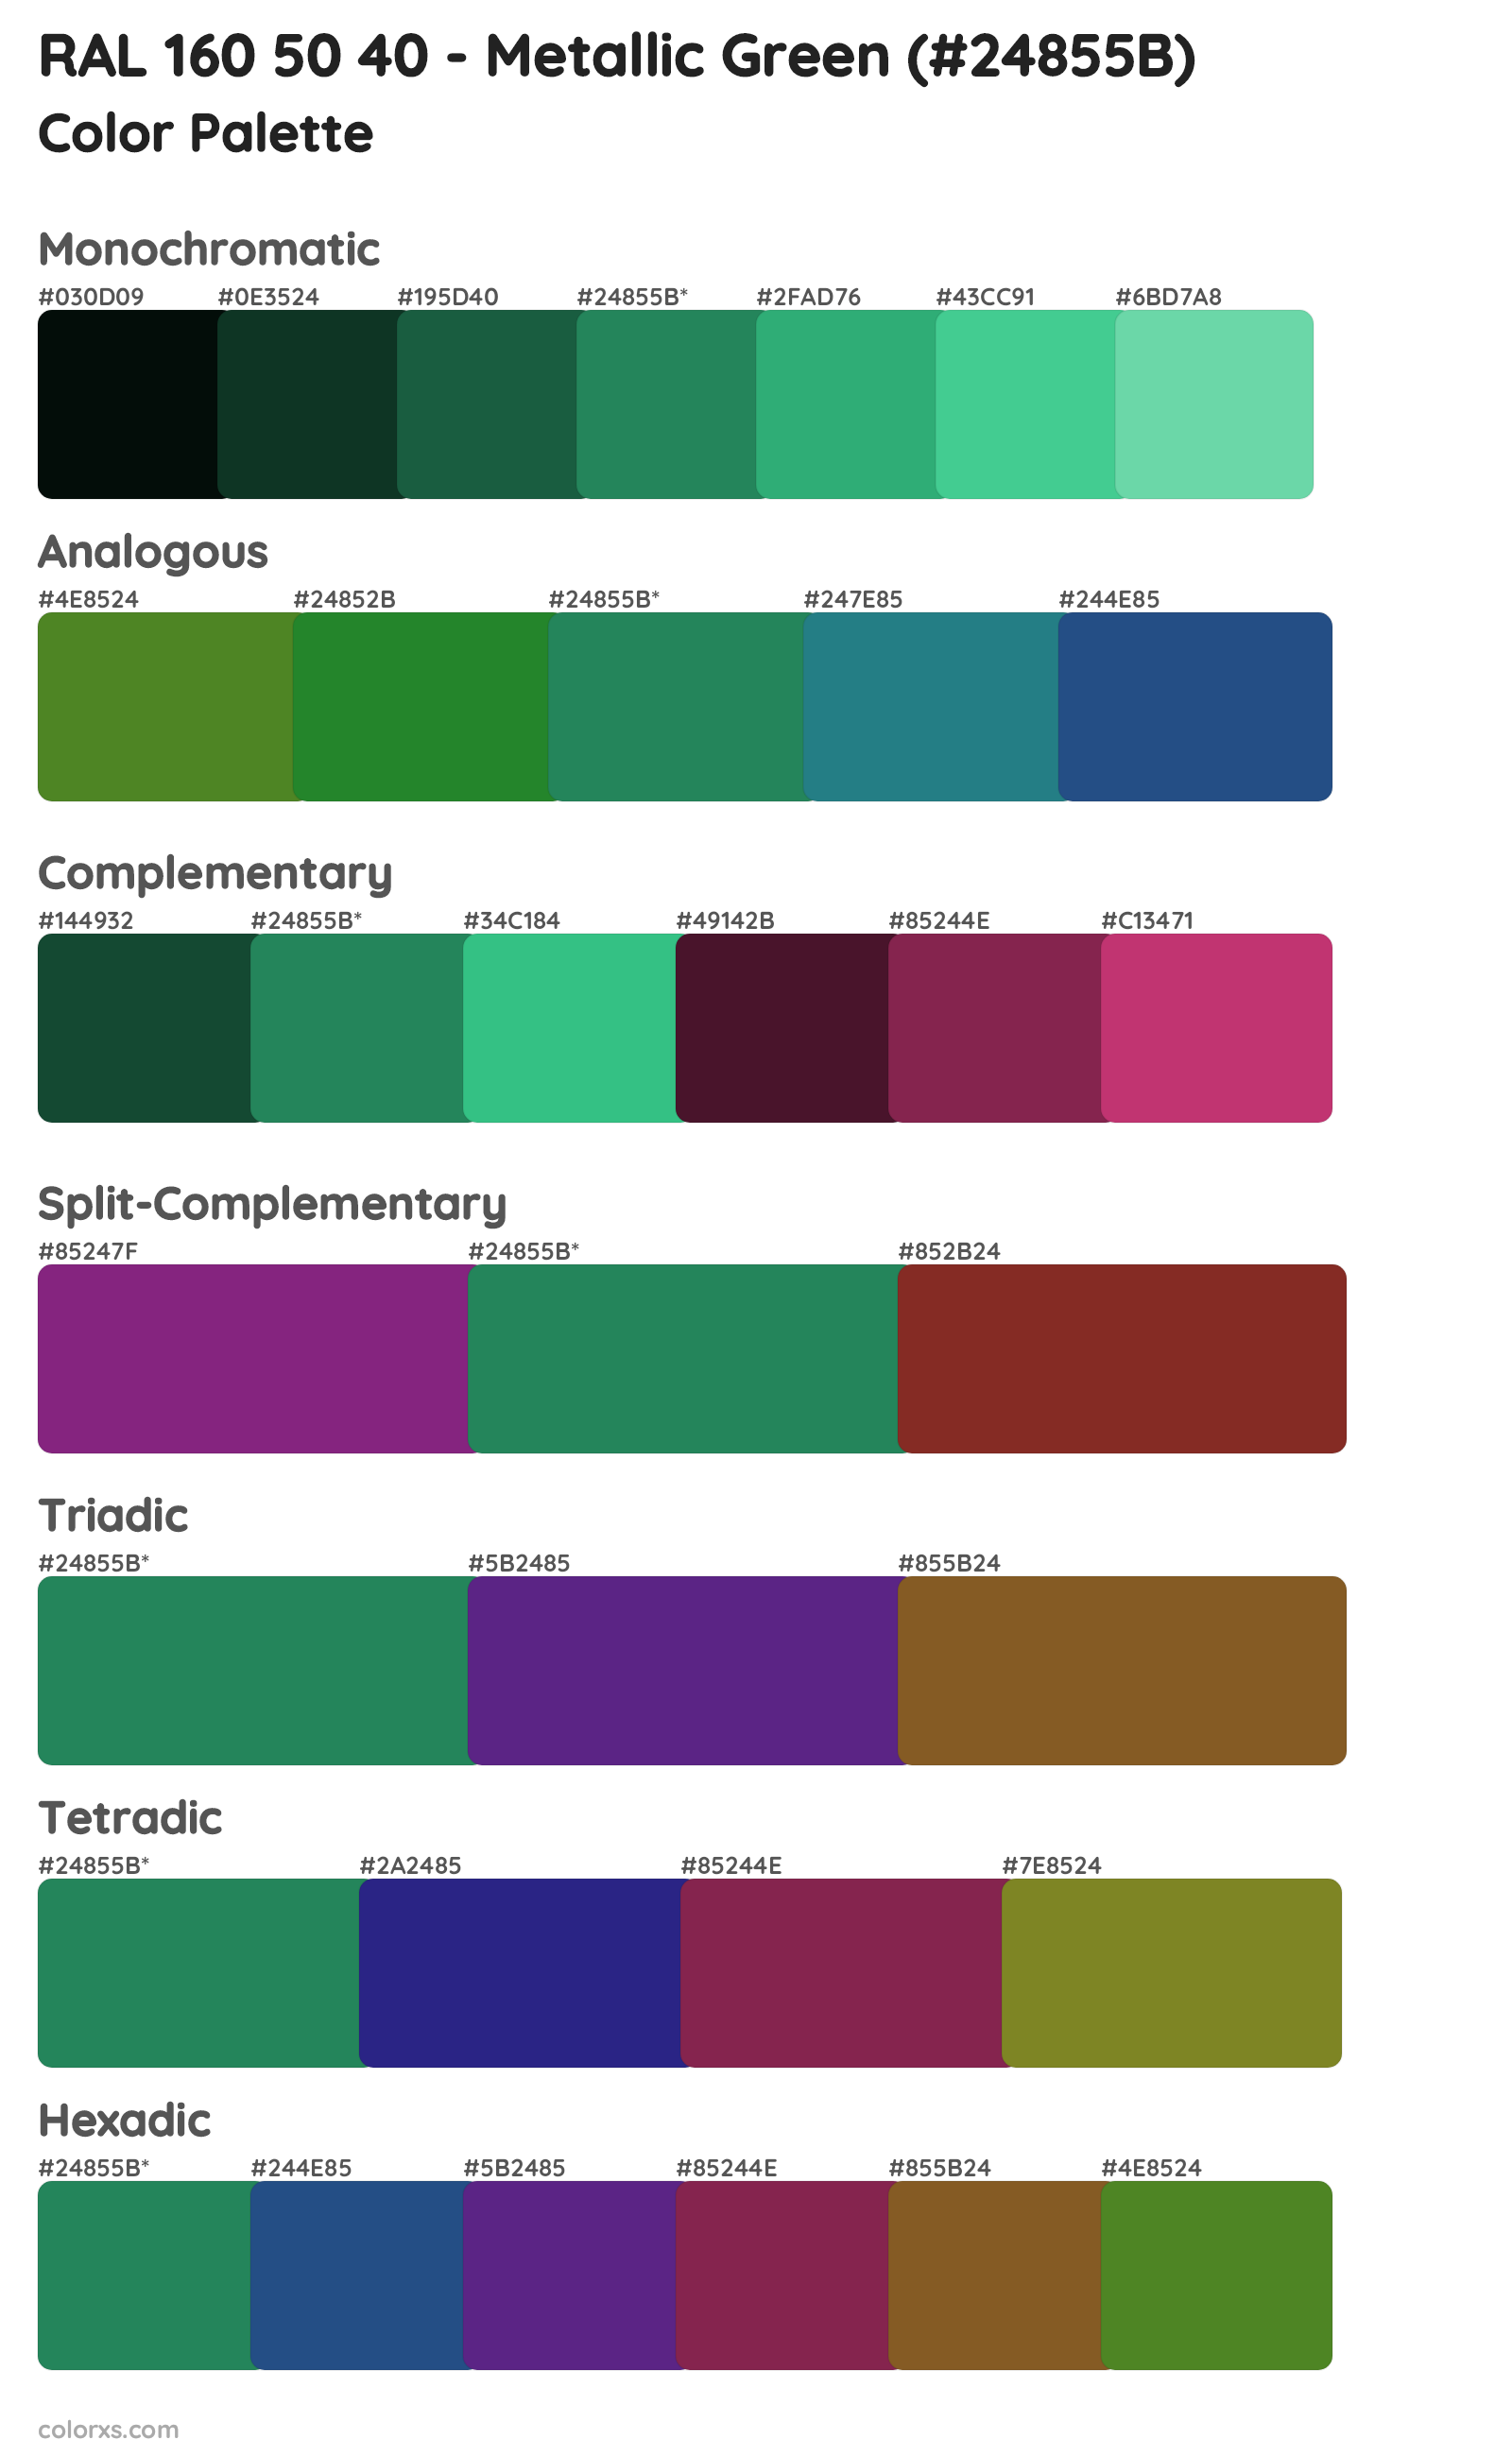 RAL 160 50 40 - Metallic Green Color Scheme Palettes